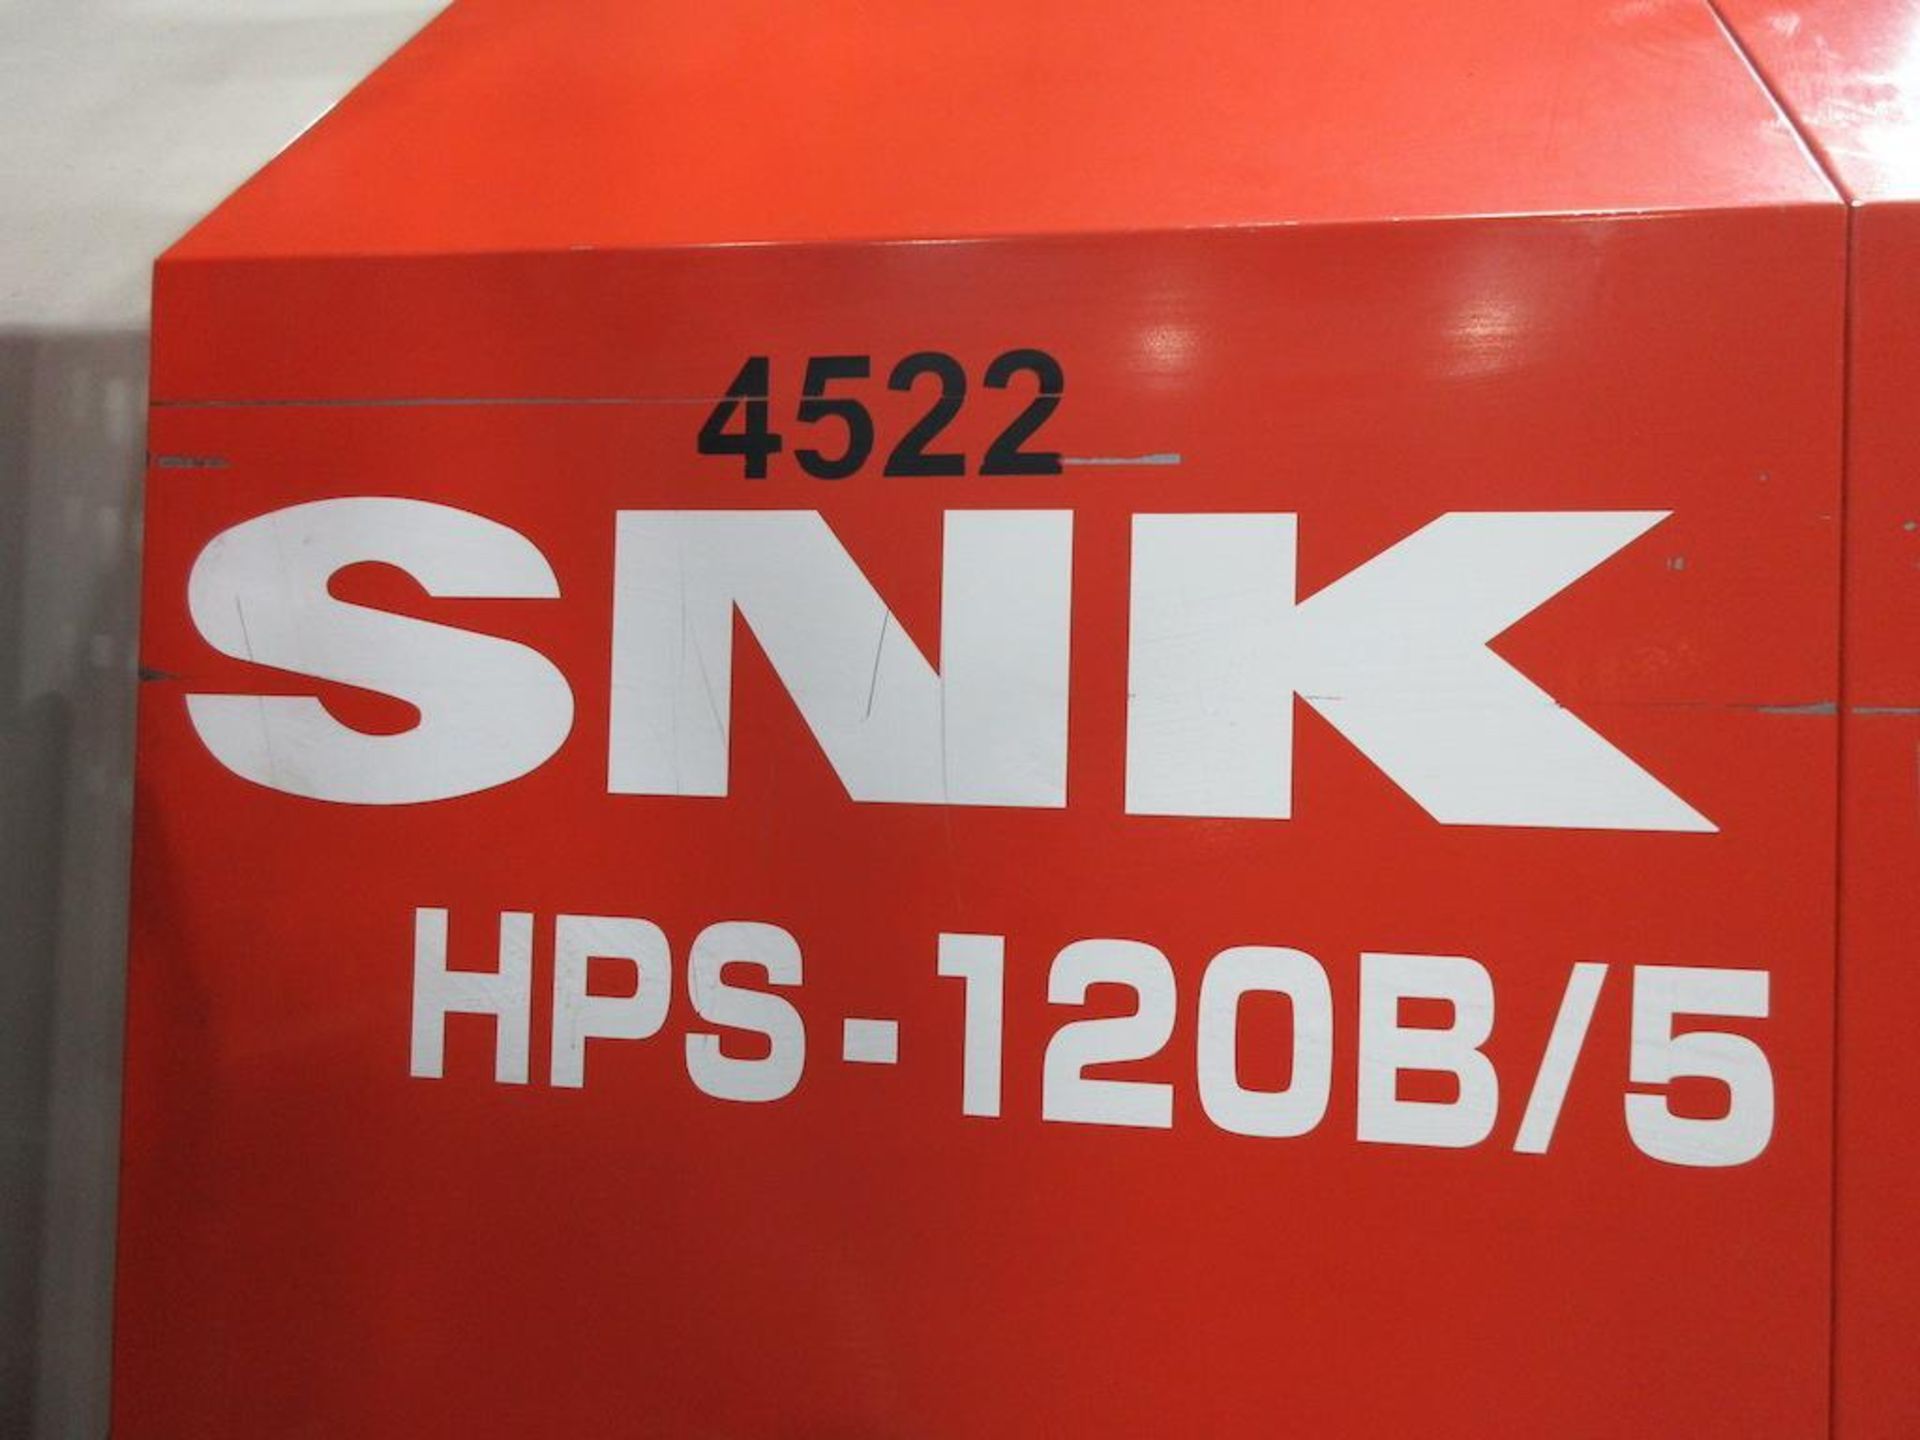 2006 SNK HPS 120B/5 5 axis high speed CNC Horizontal Machining Center Profiler, Fanuc 31i  model A5, - Image 14 of 14